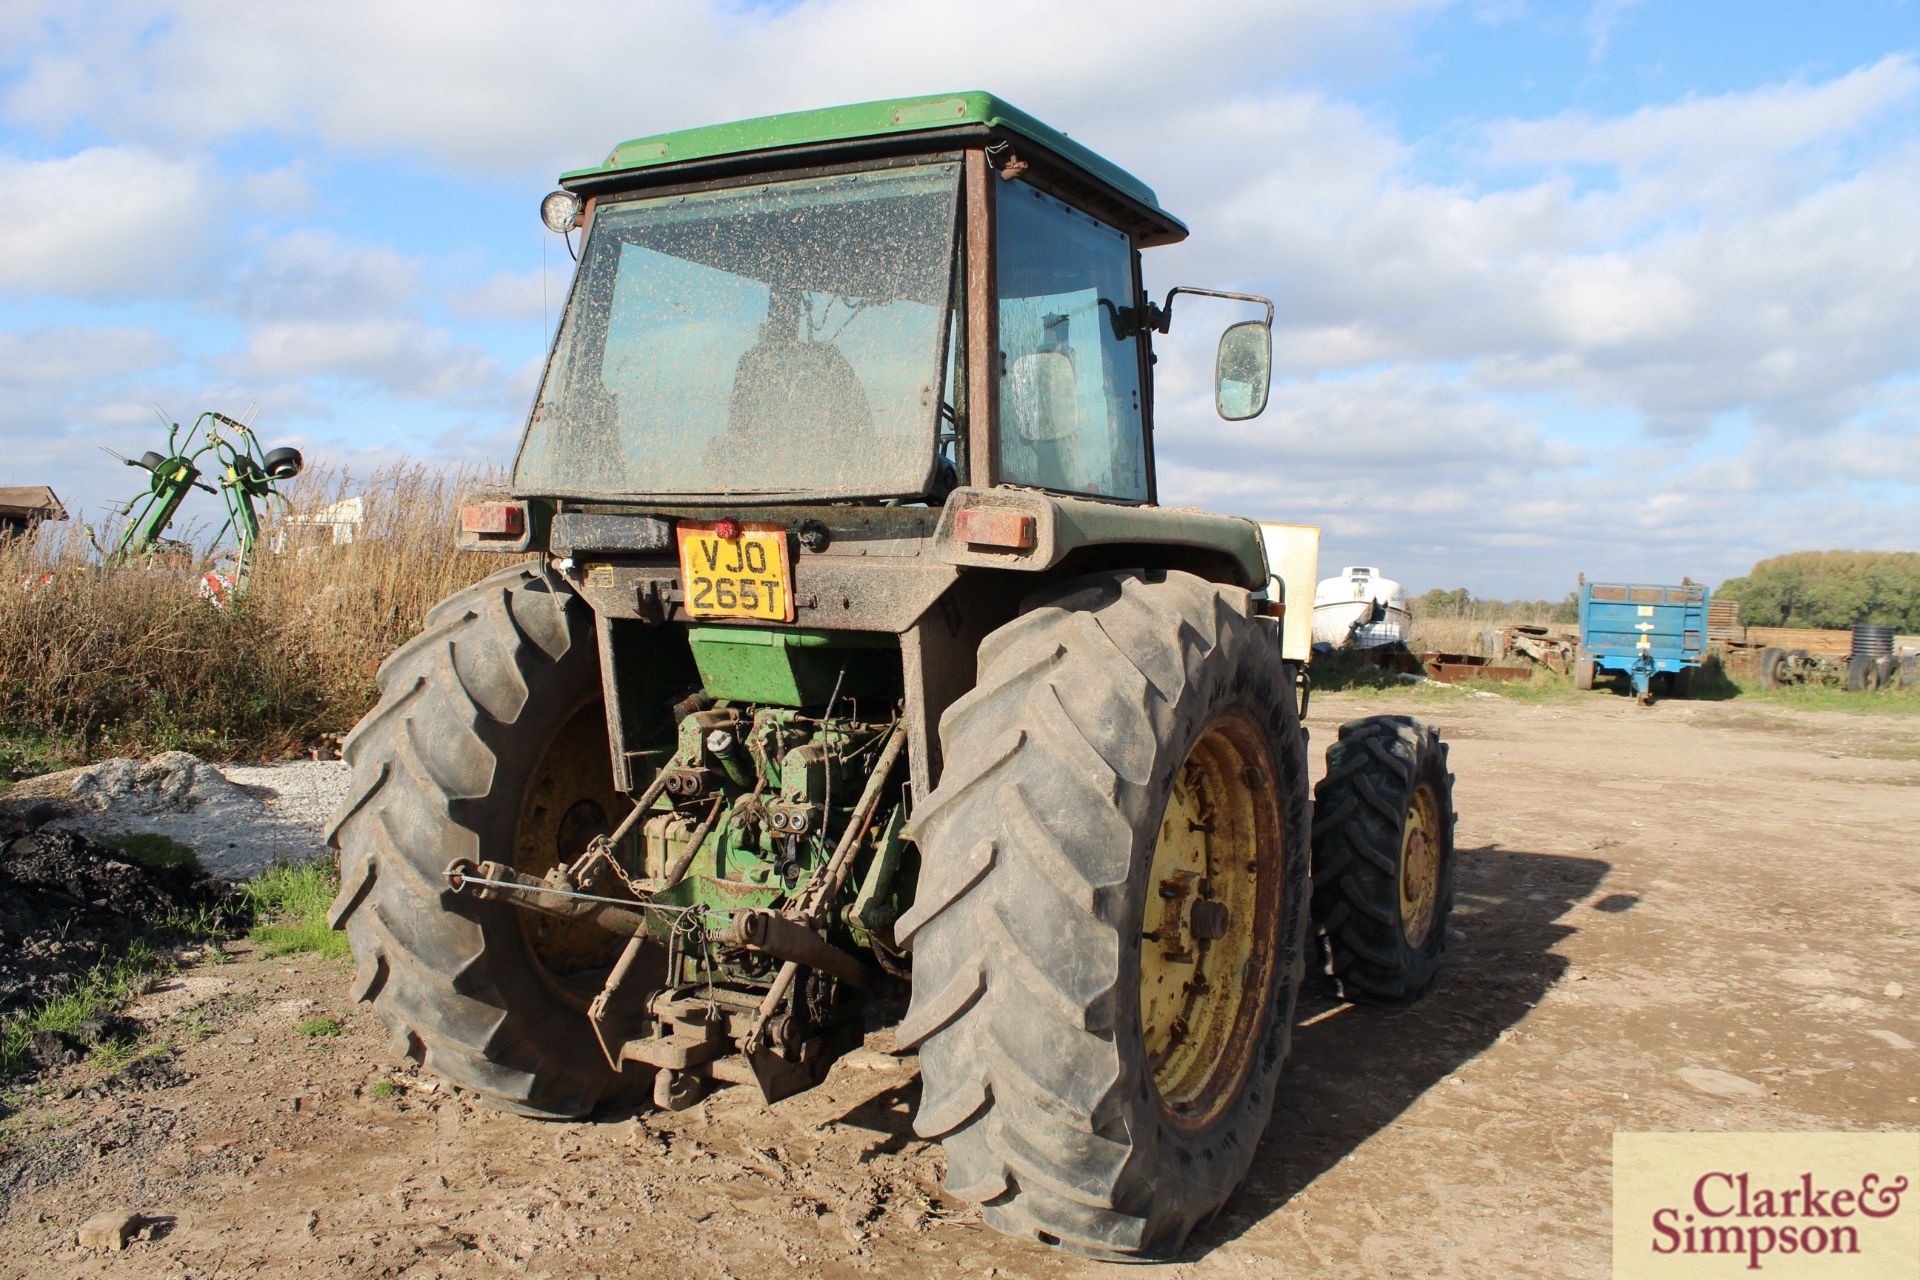 John Deere 4040 4WD tractor. Registration VJO 265T - Image 3 of 35